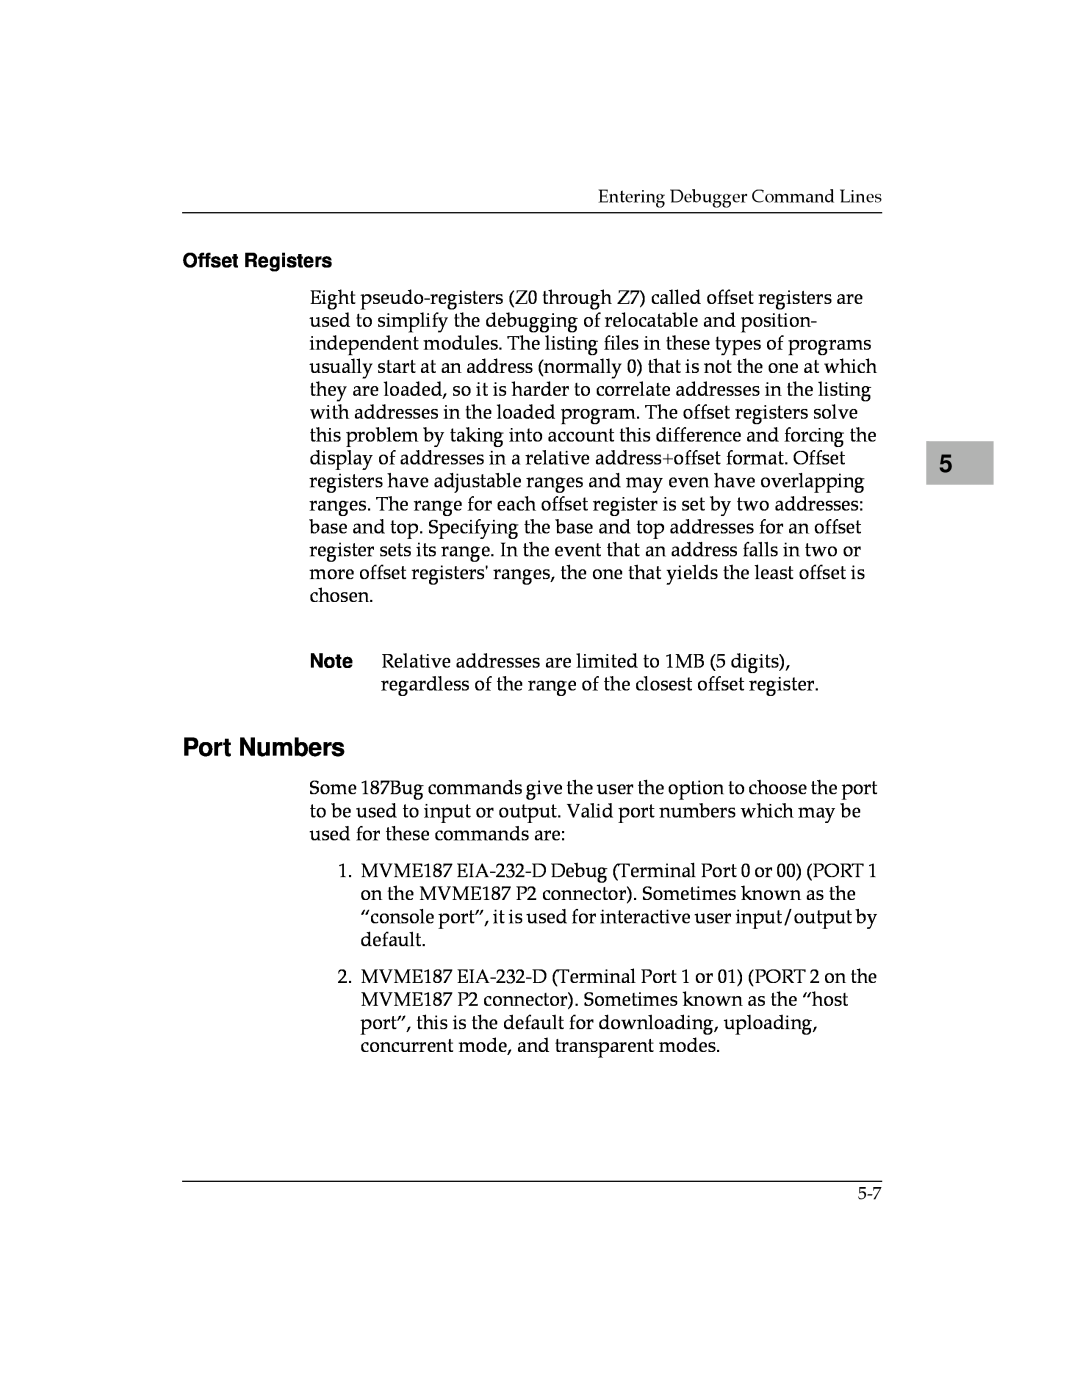 Motorola MVME187 manual Port Numbers, Offset Registers 